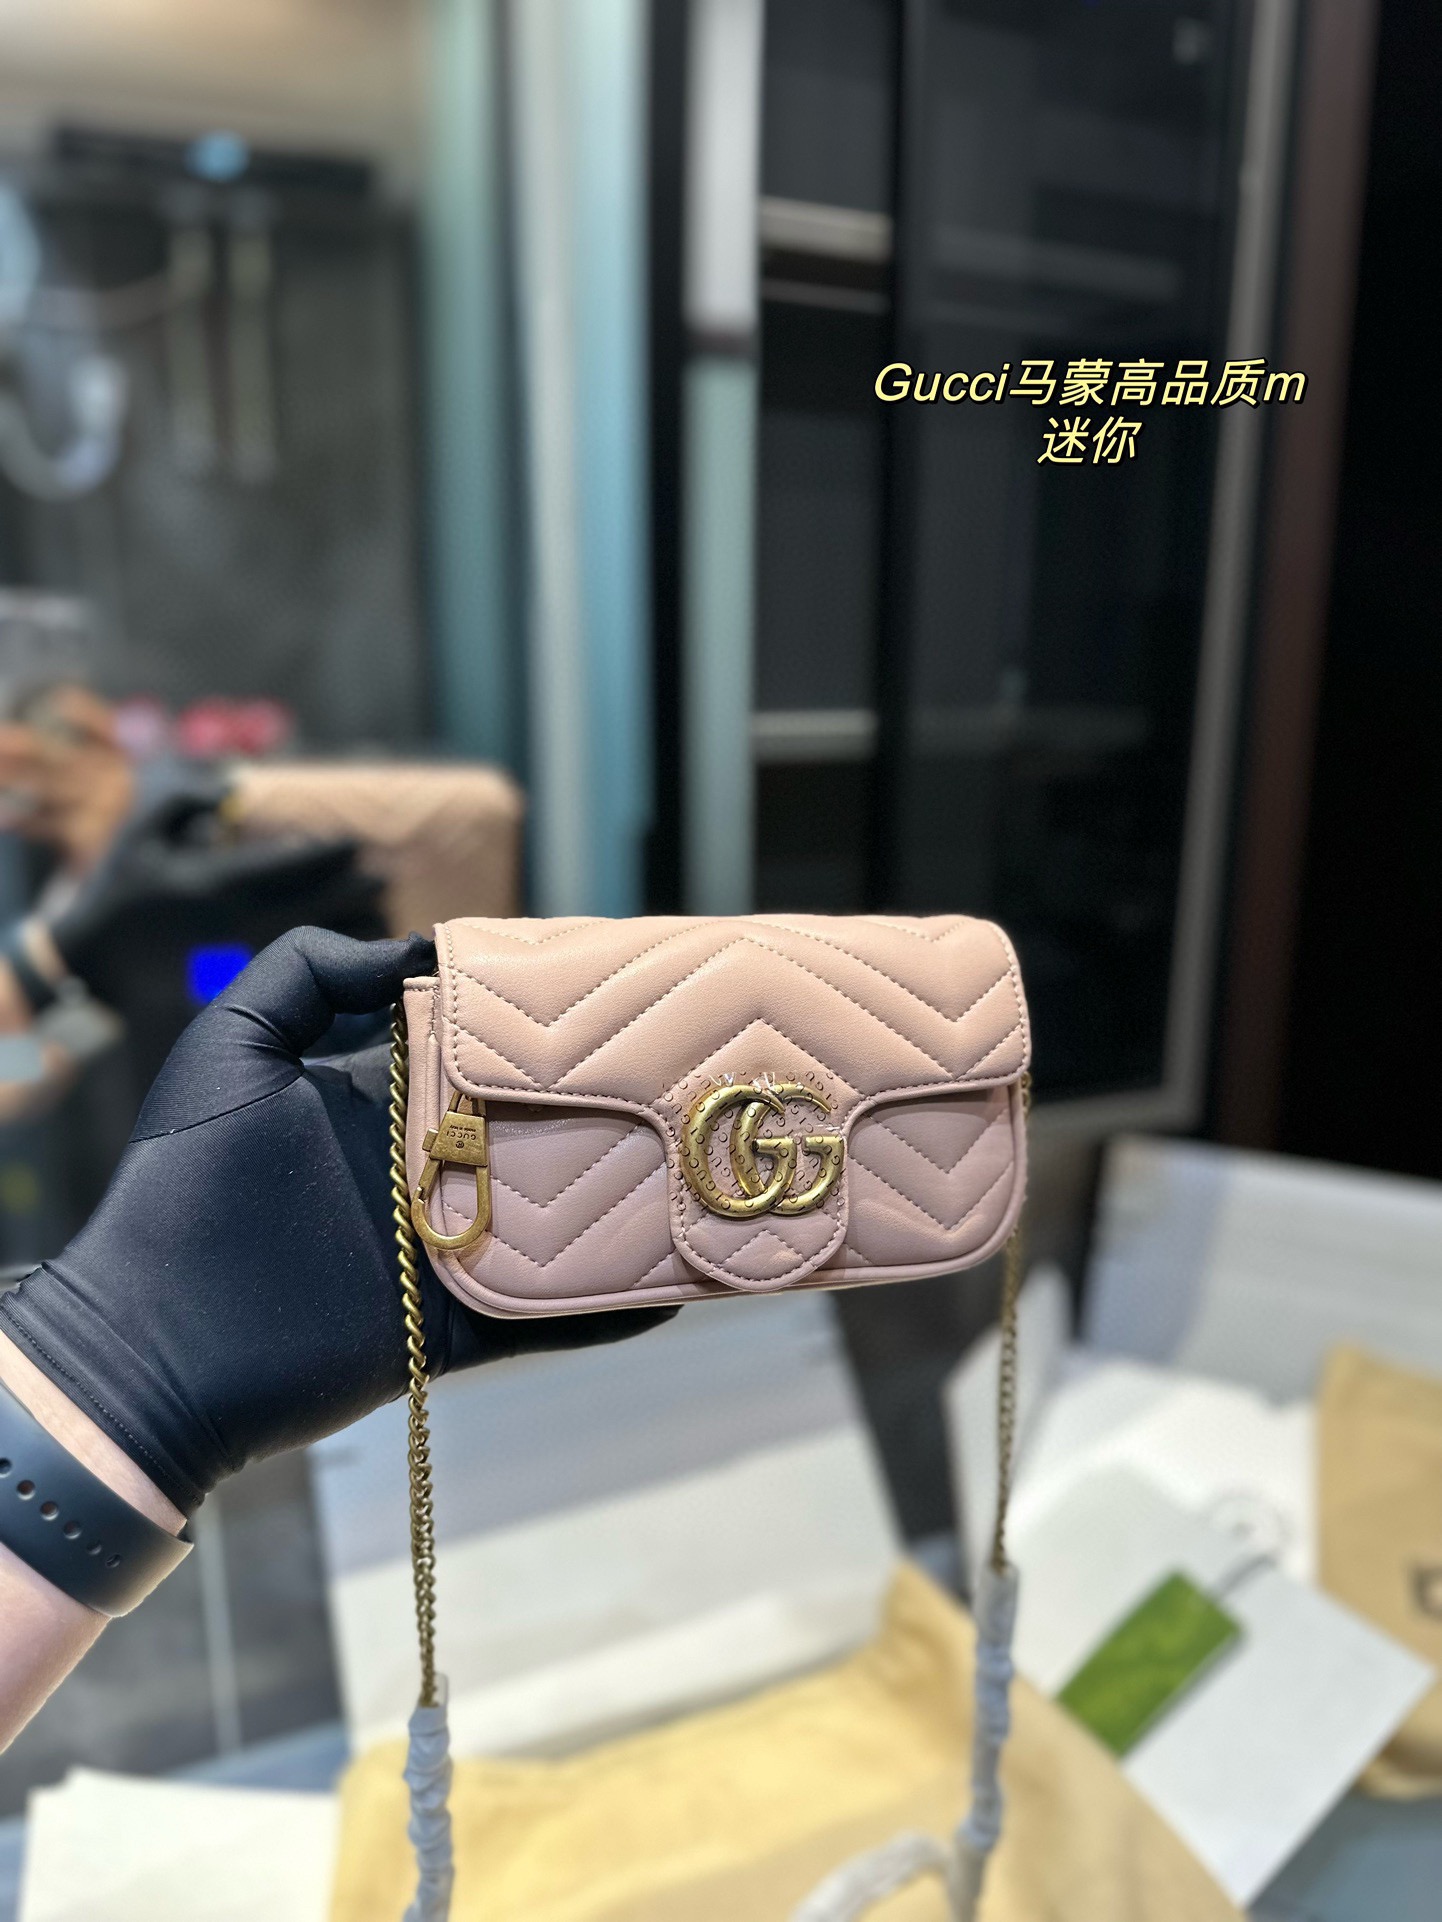 Gucci Marmont handbag 22cm/16.5cm GG logo buckle flap underarm bag new arrival 